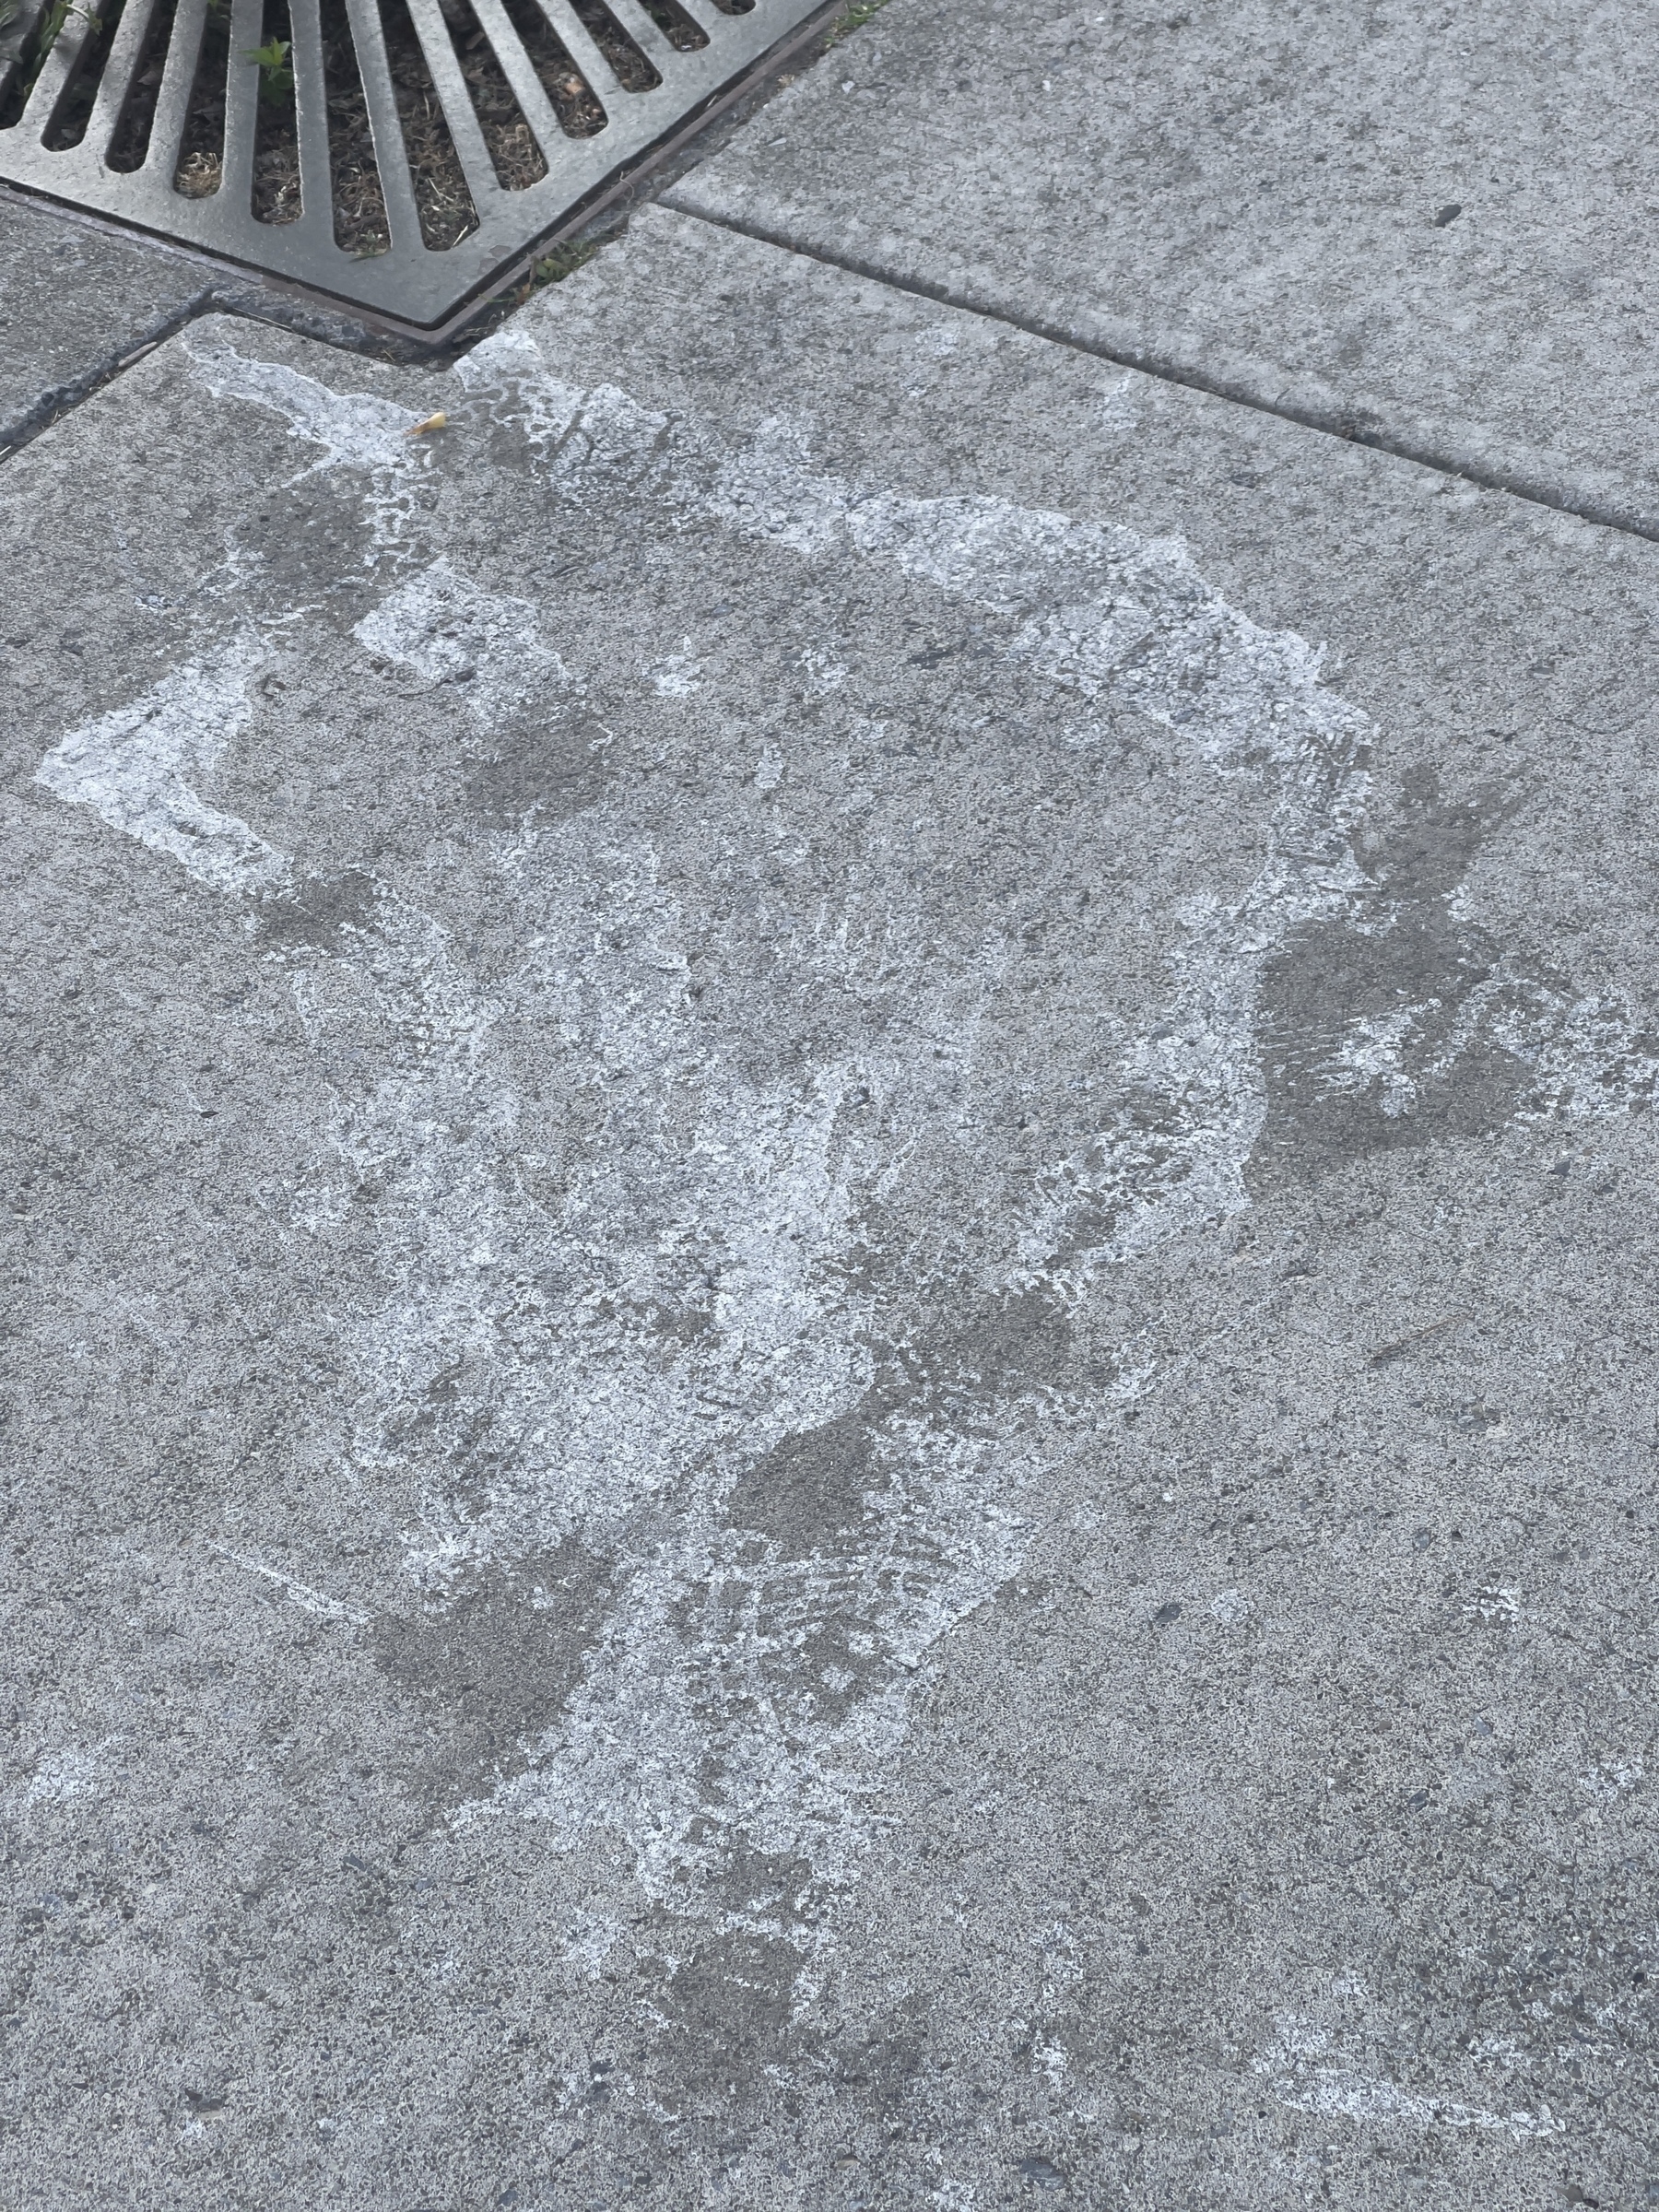 White amorphous stain on concrete sidewalk.